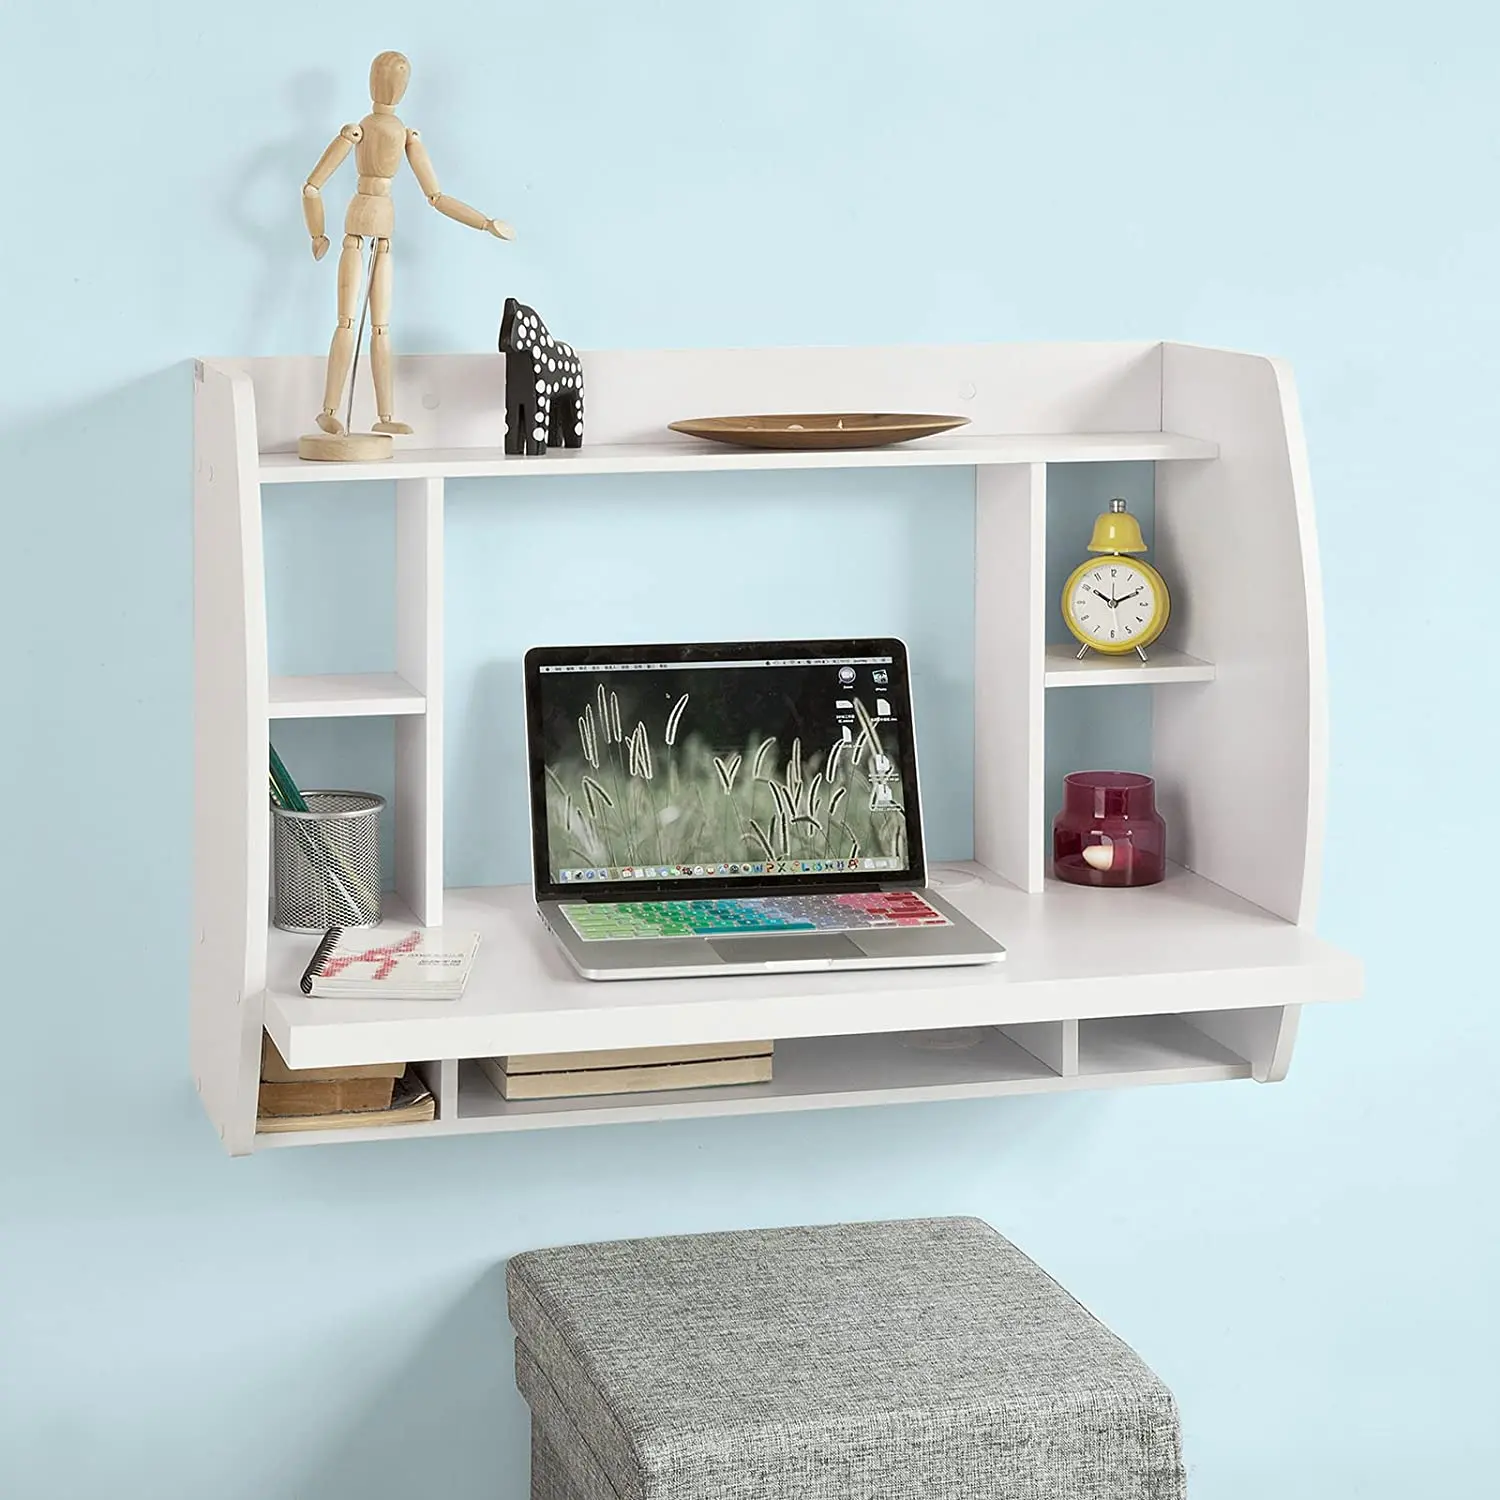 Floating simple design workstation computer desk with storage shelves for home and office furniture